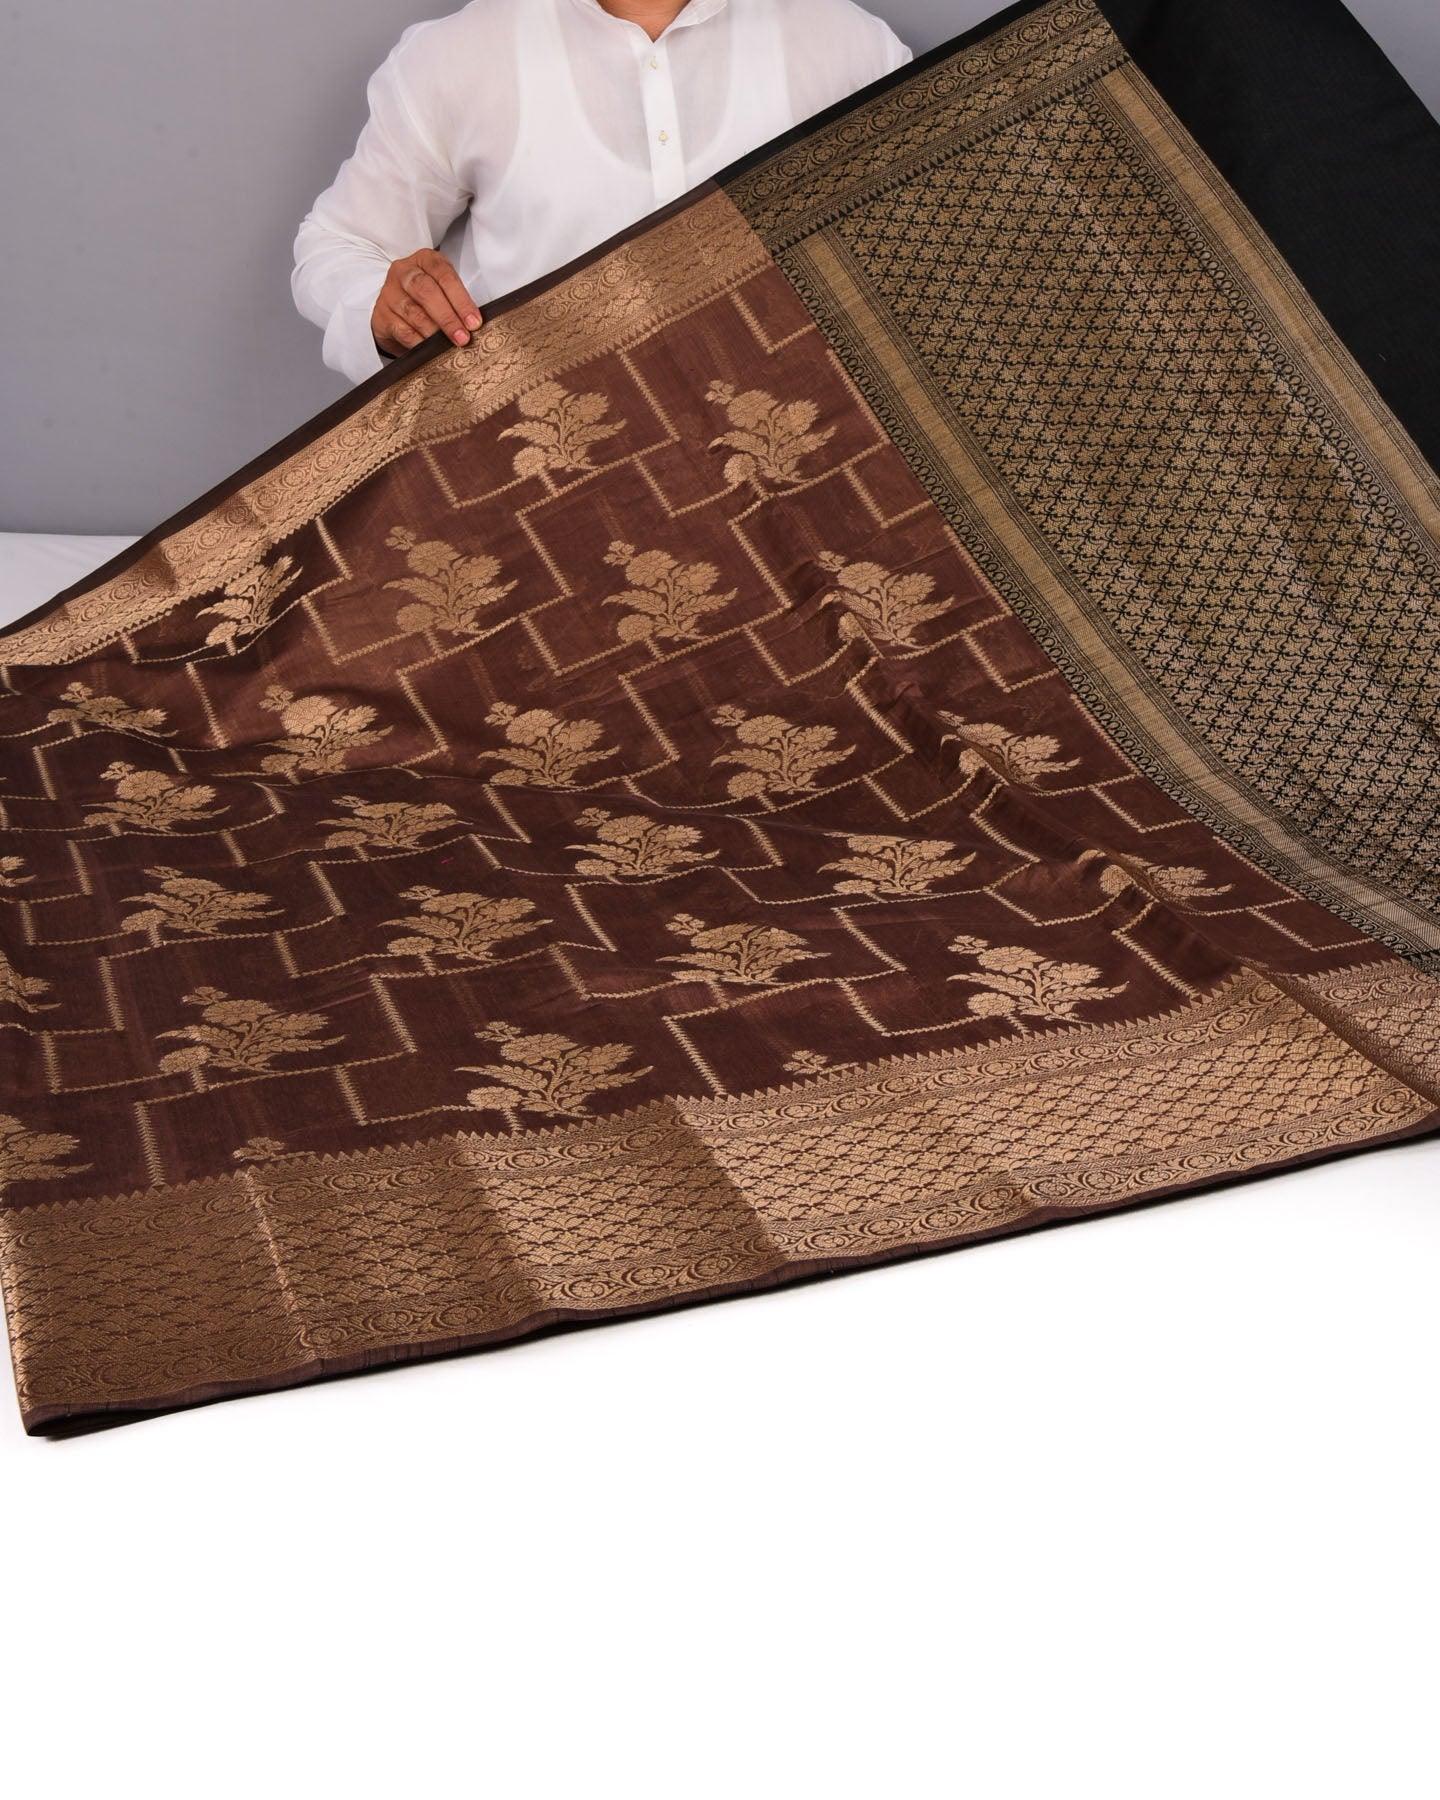 Chocolate Brown Banarasi Geometric Grids Cutwork Brocade Woven Cotton Silk Saree - By HolyWeaves, Benares